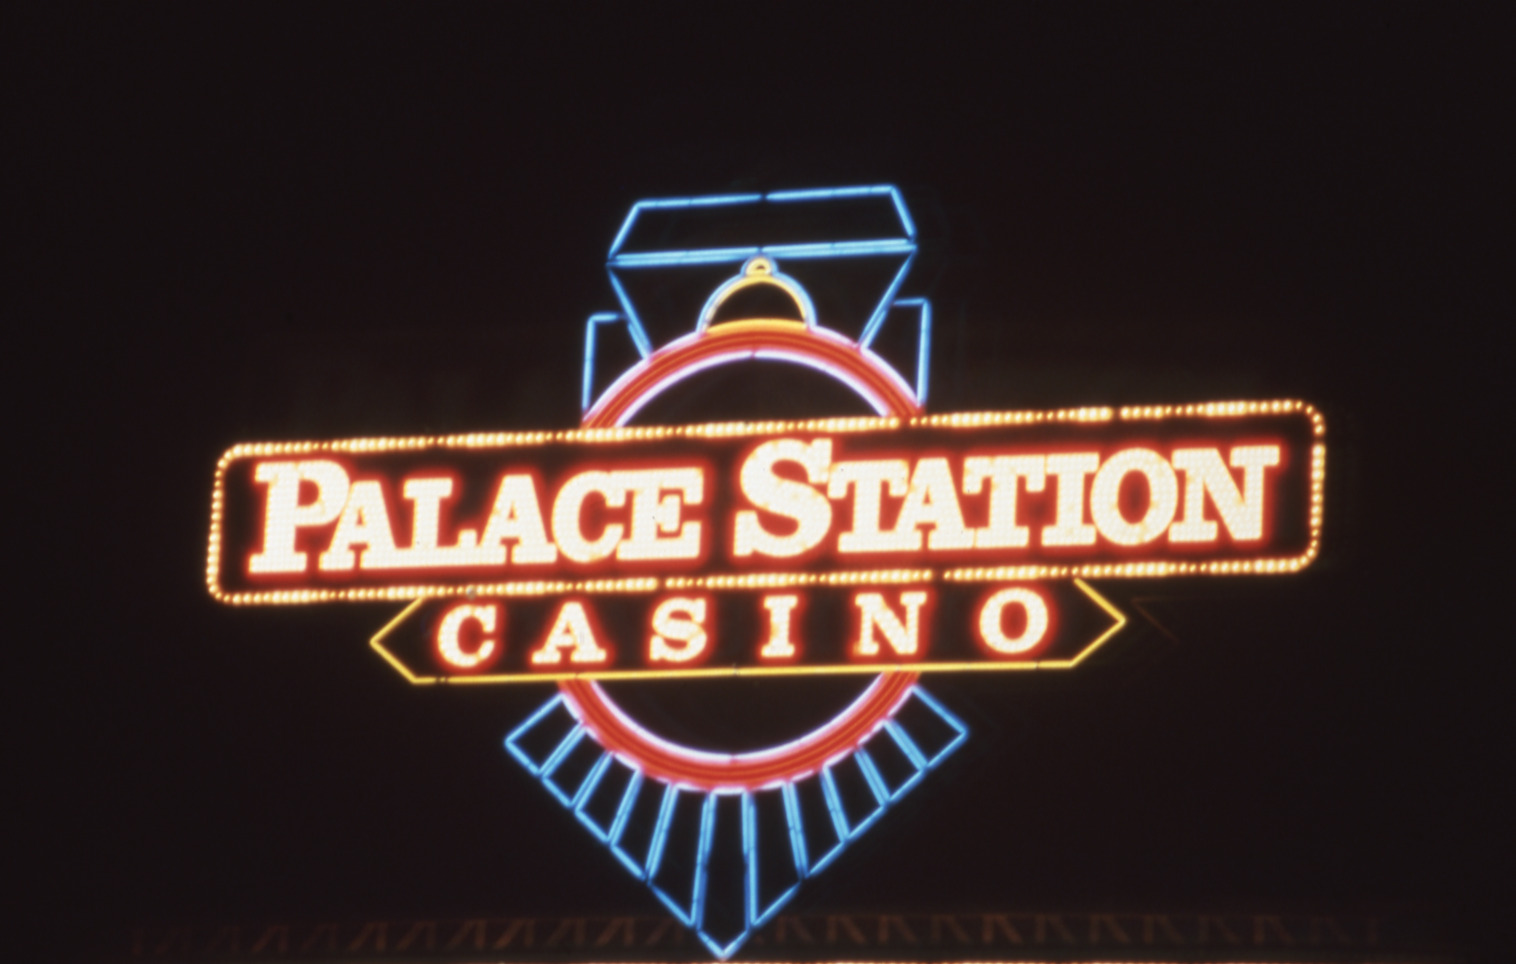 Palace Station Casino pylon and wall signs, Las Vegas, Nevada: photographic print